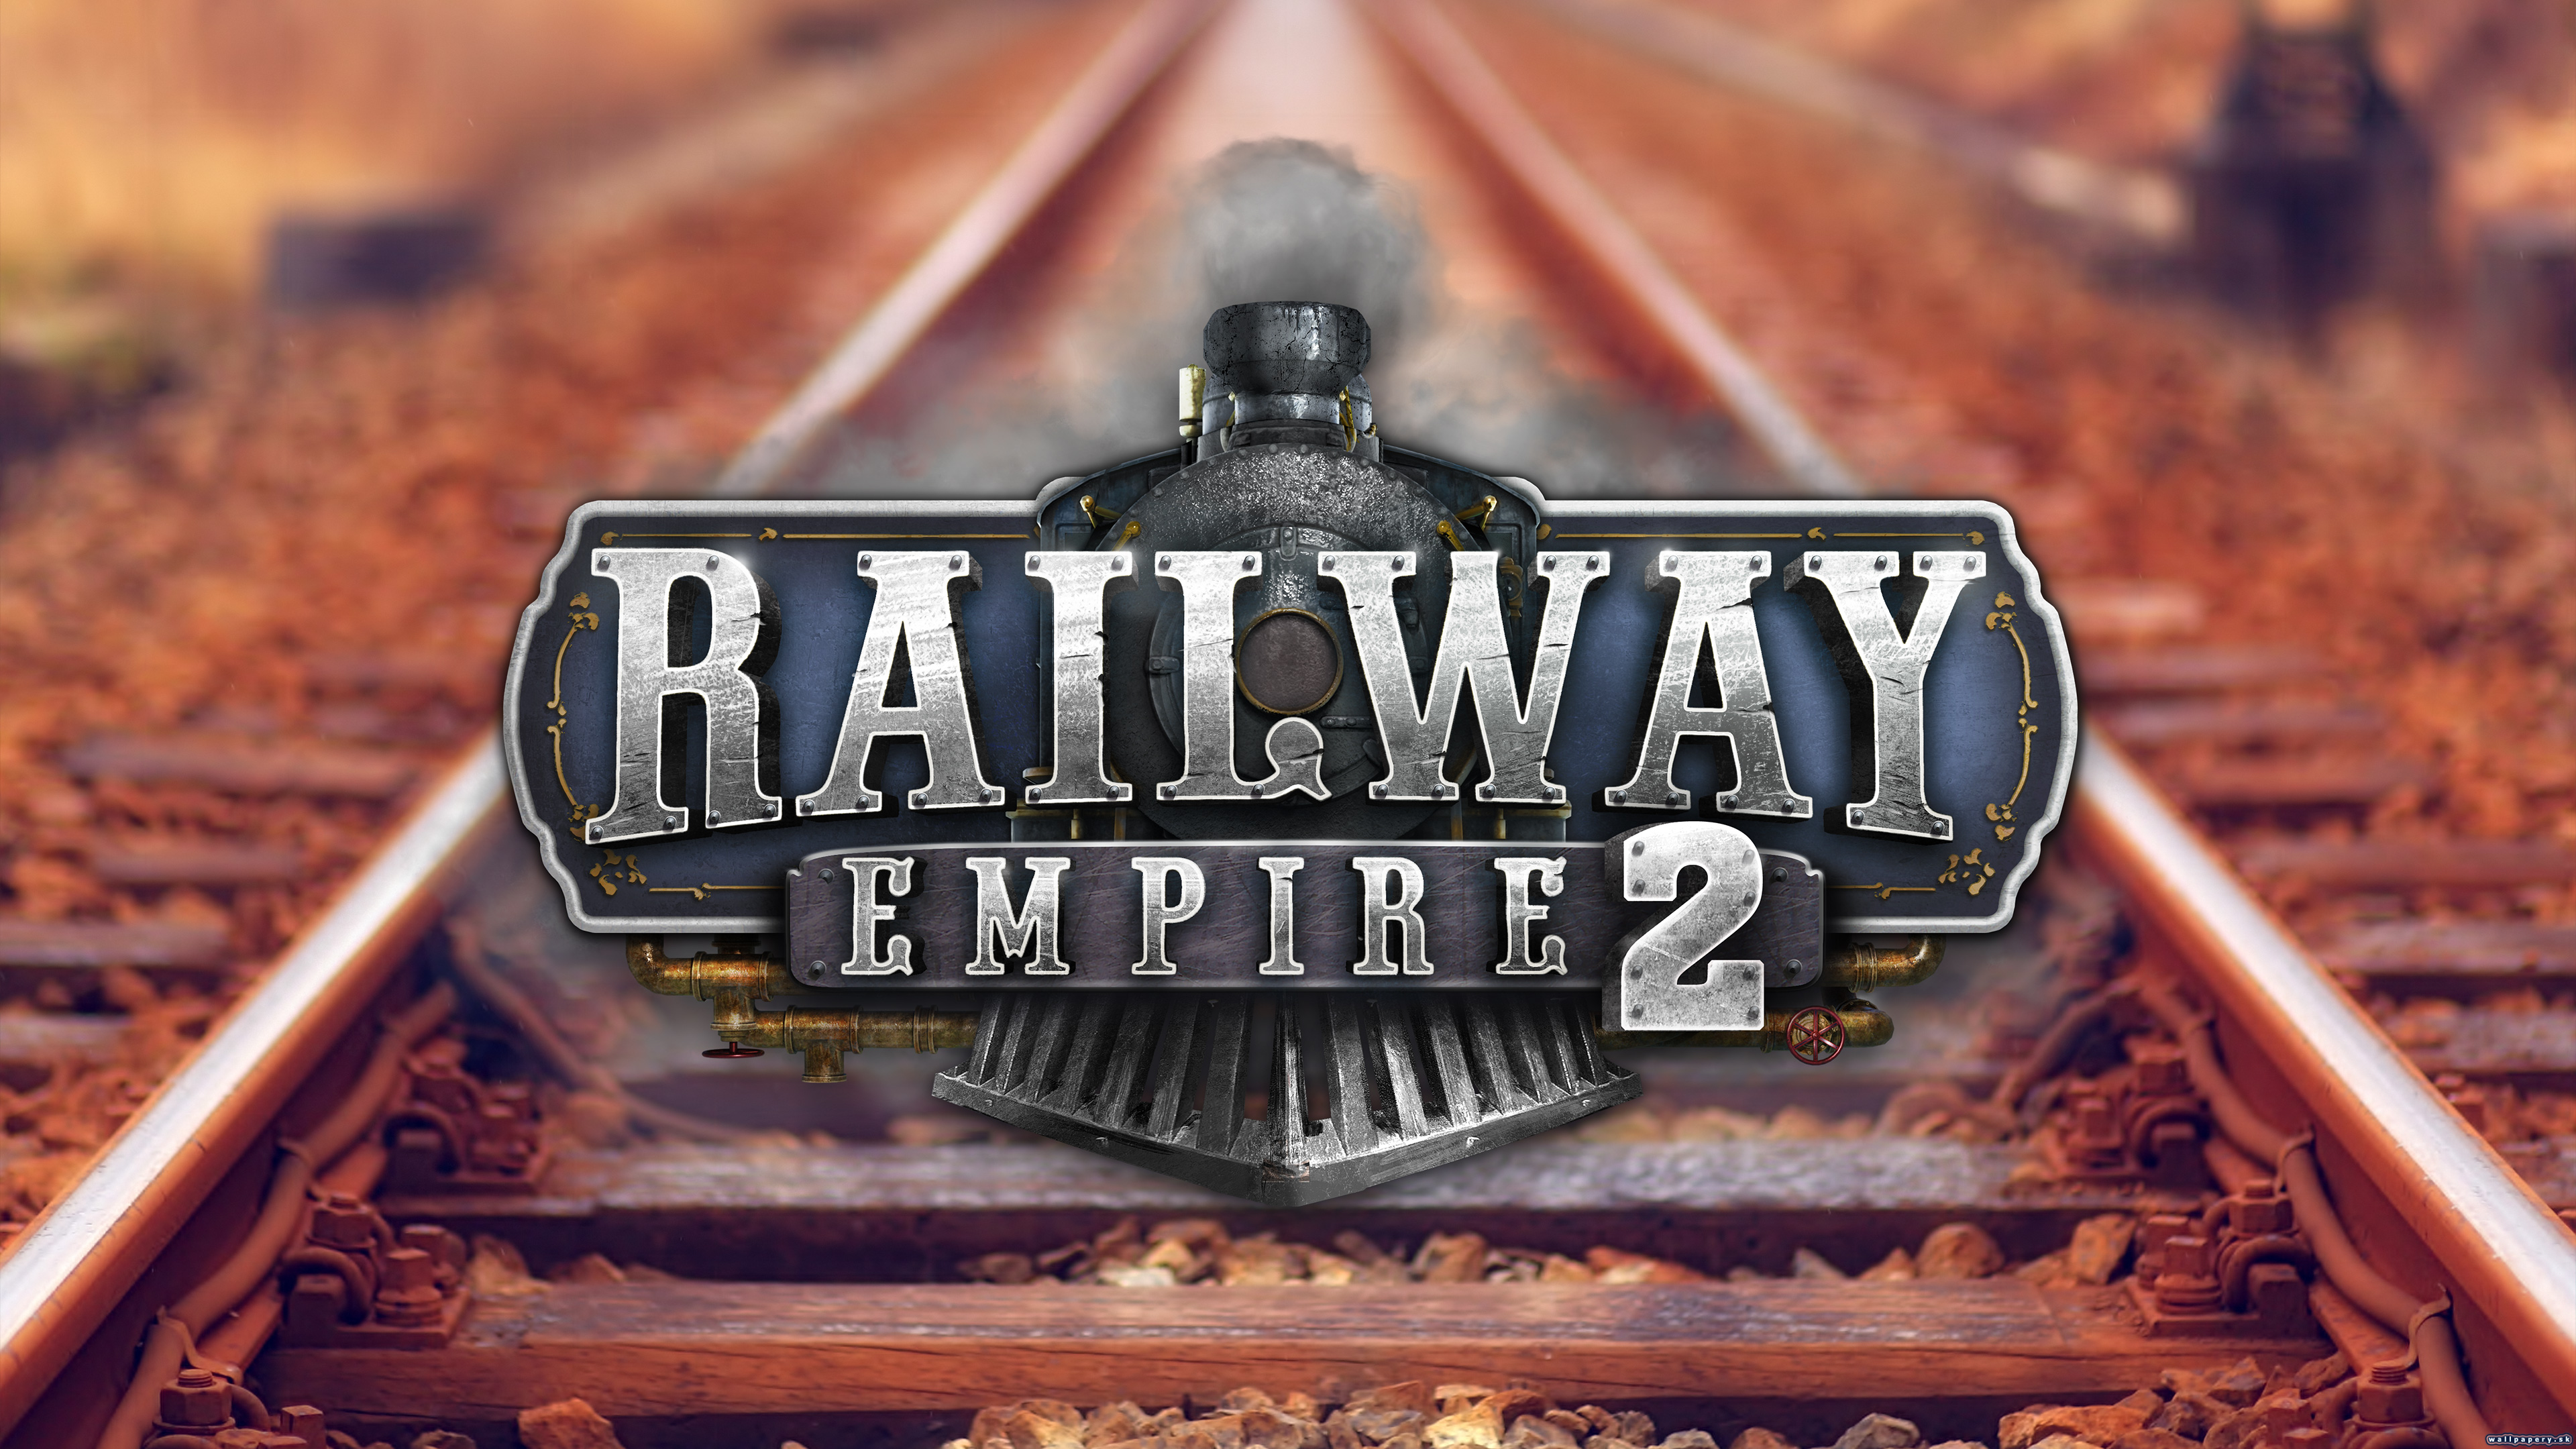 Railway Empire 2 - wallpaper 2